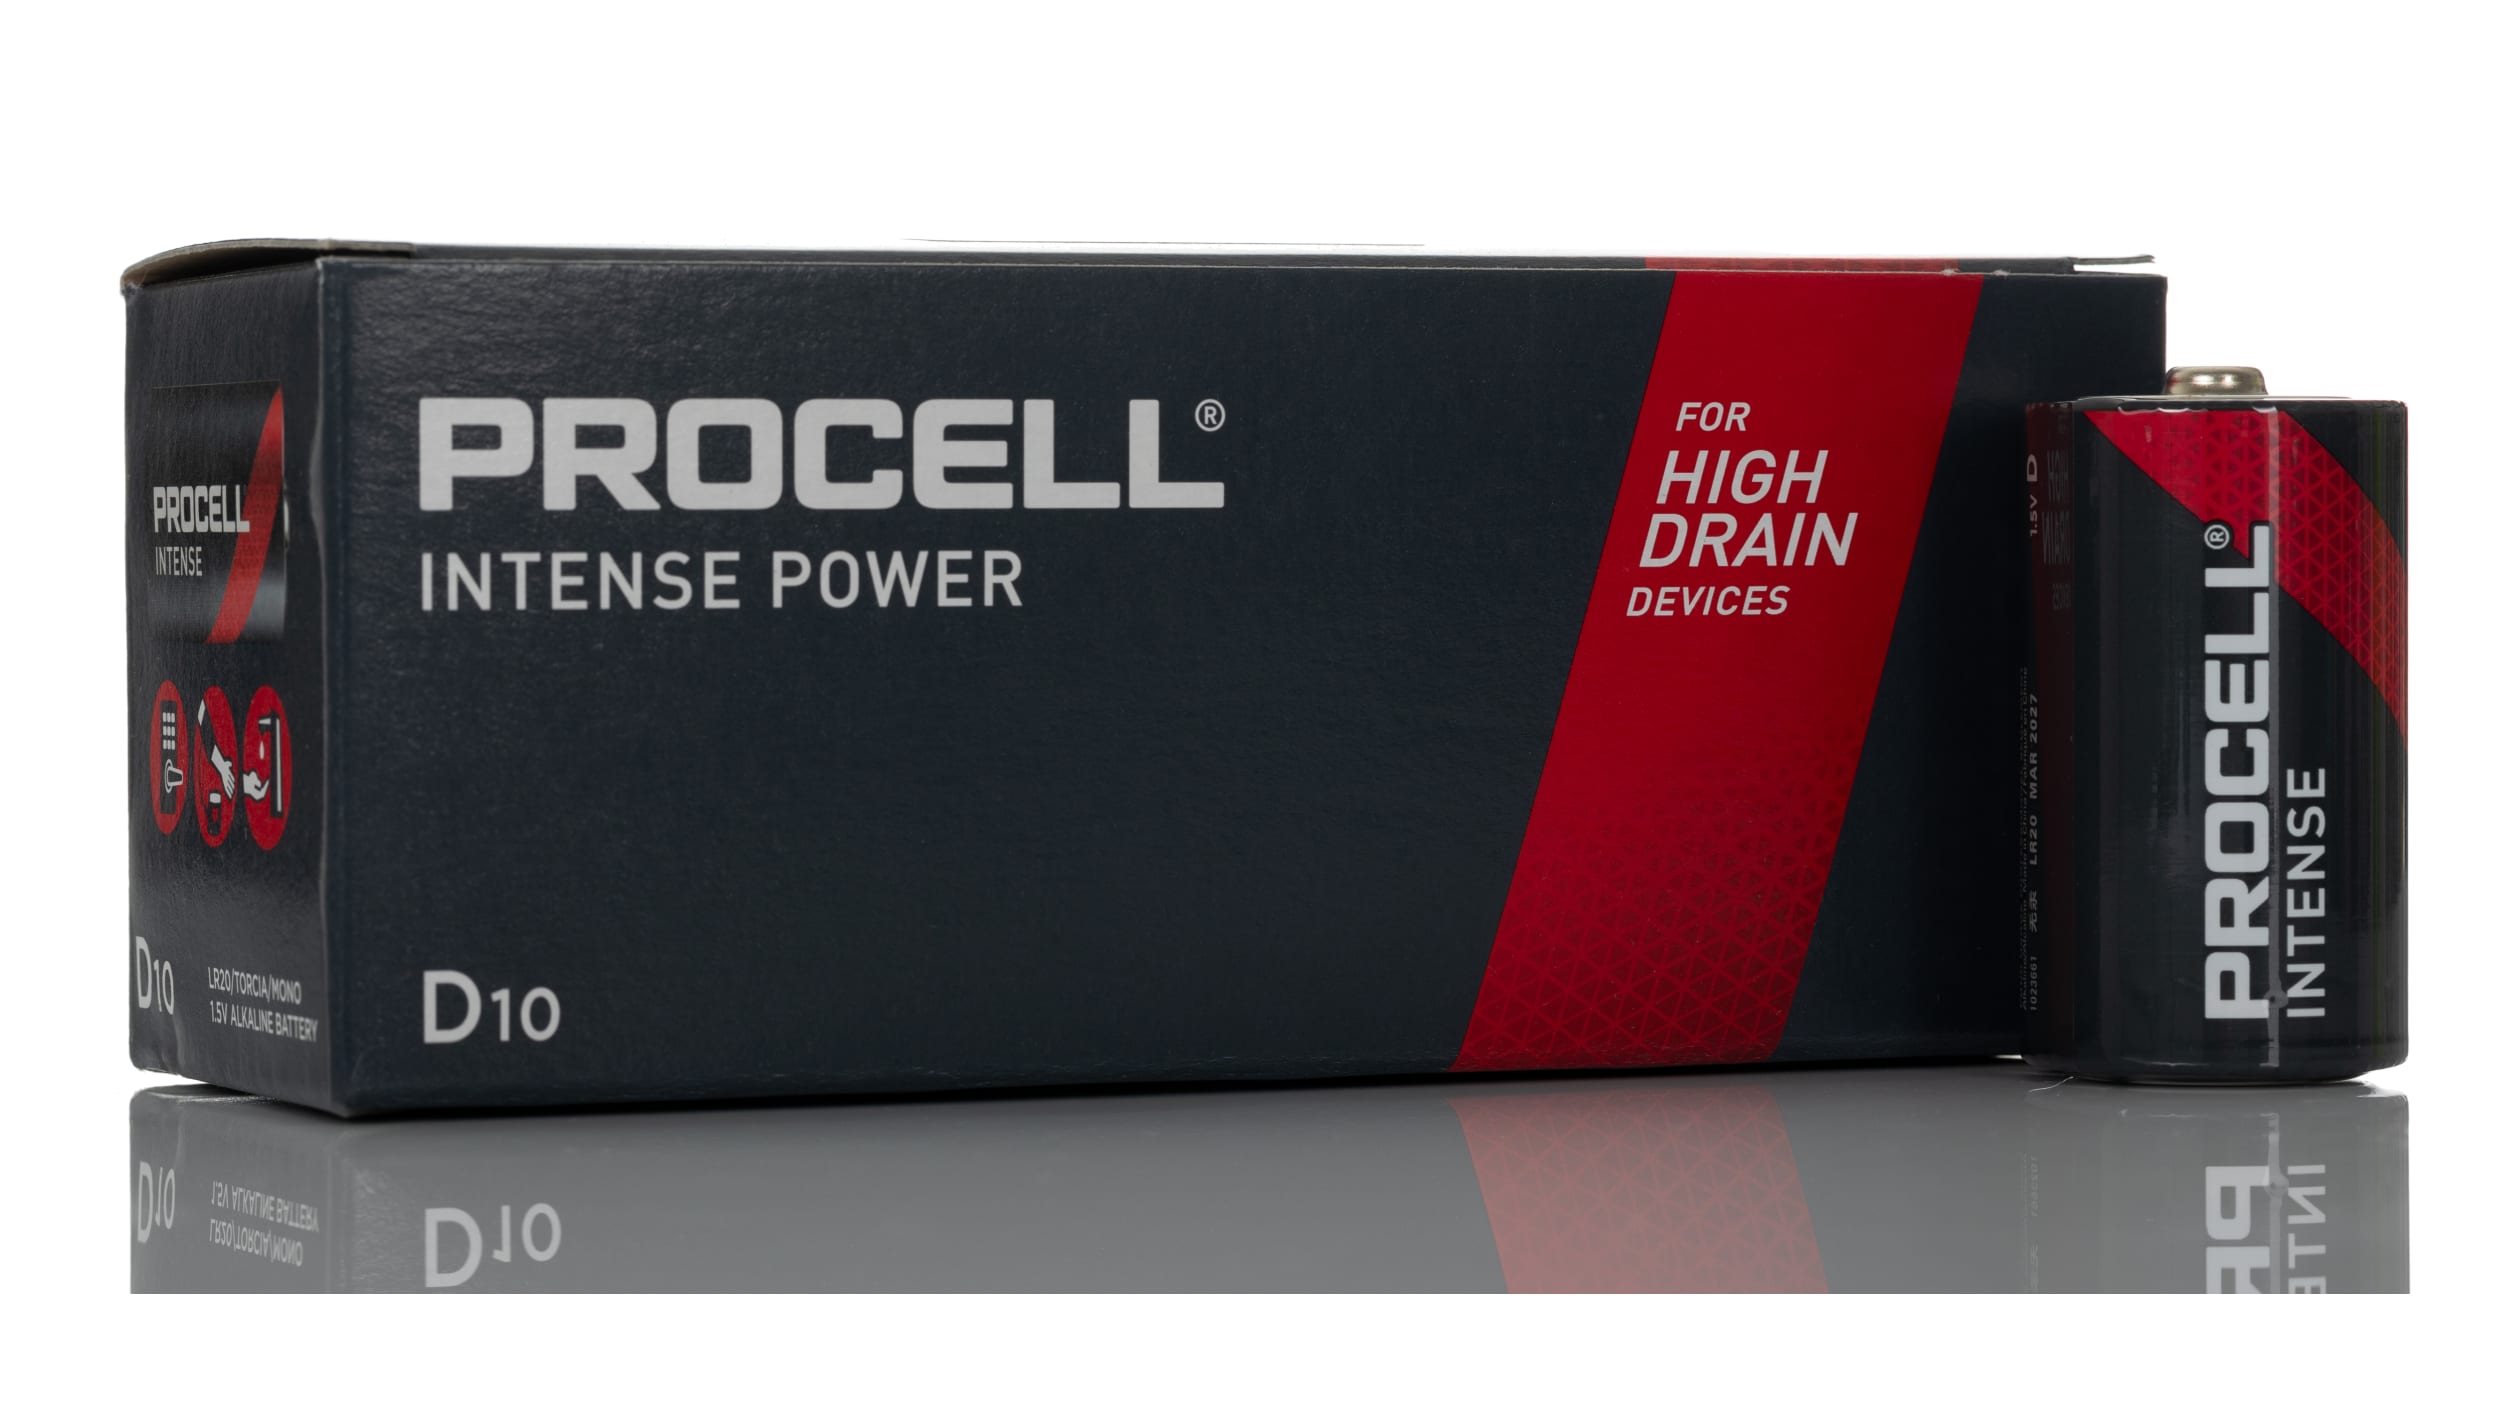 LR20 D 1.5V Duracell Procell battery, pack of 10